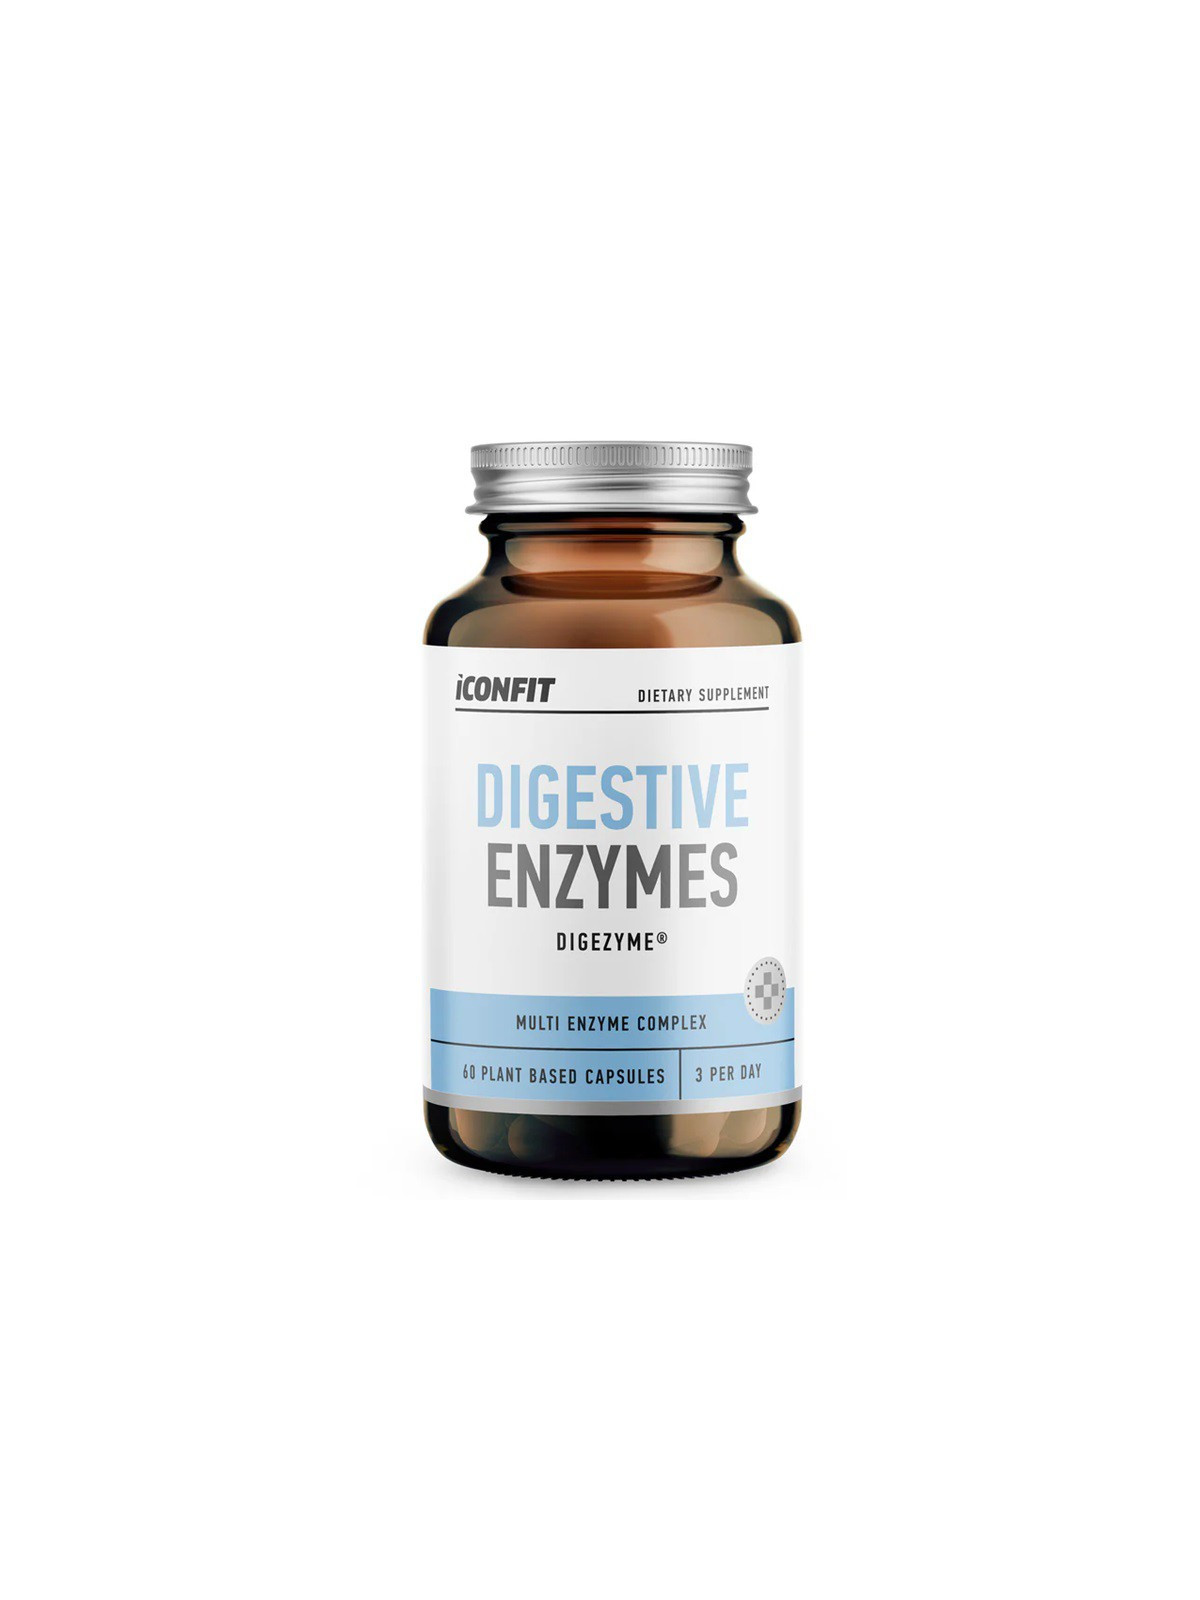 Iconfit Maisto papildas virškinimui gerinti Digestive Enzymes Supplement